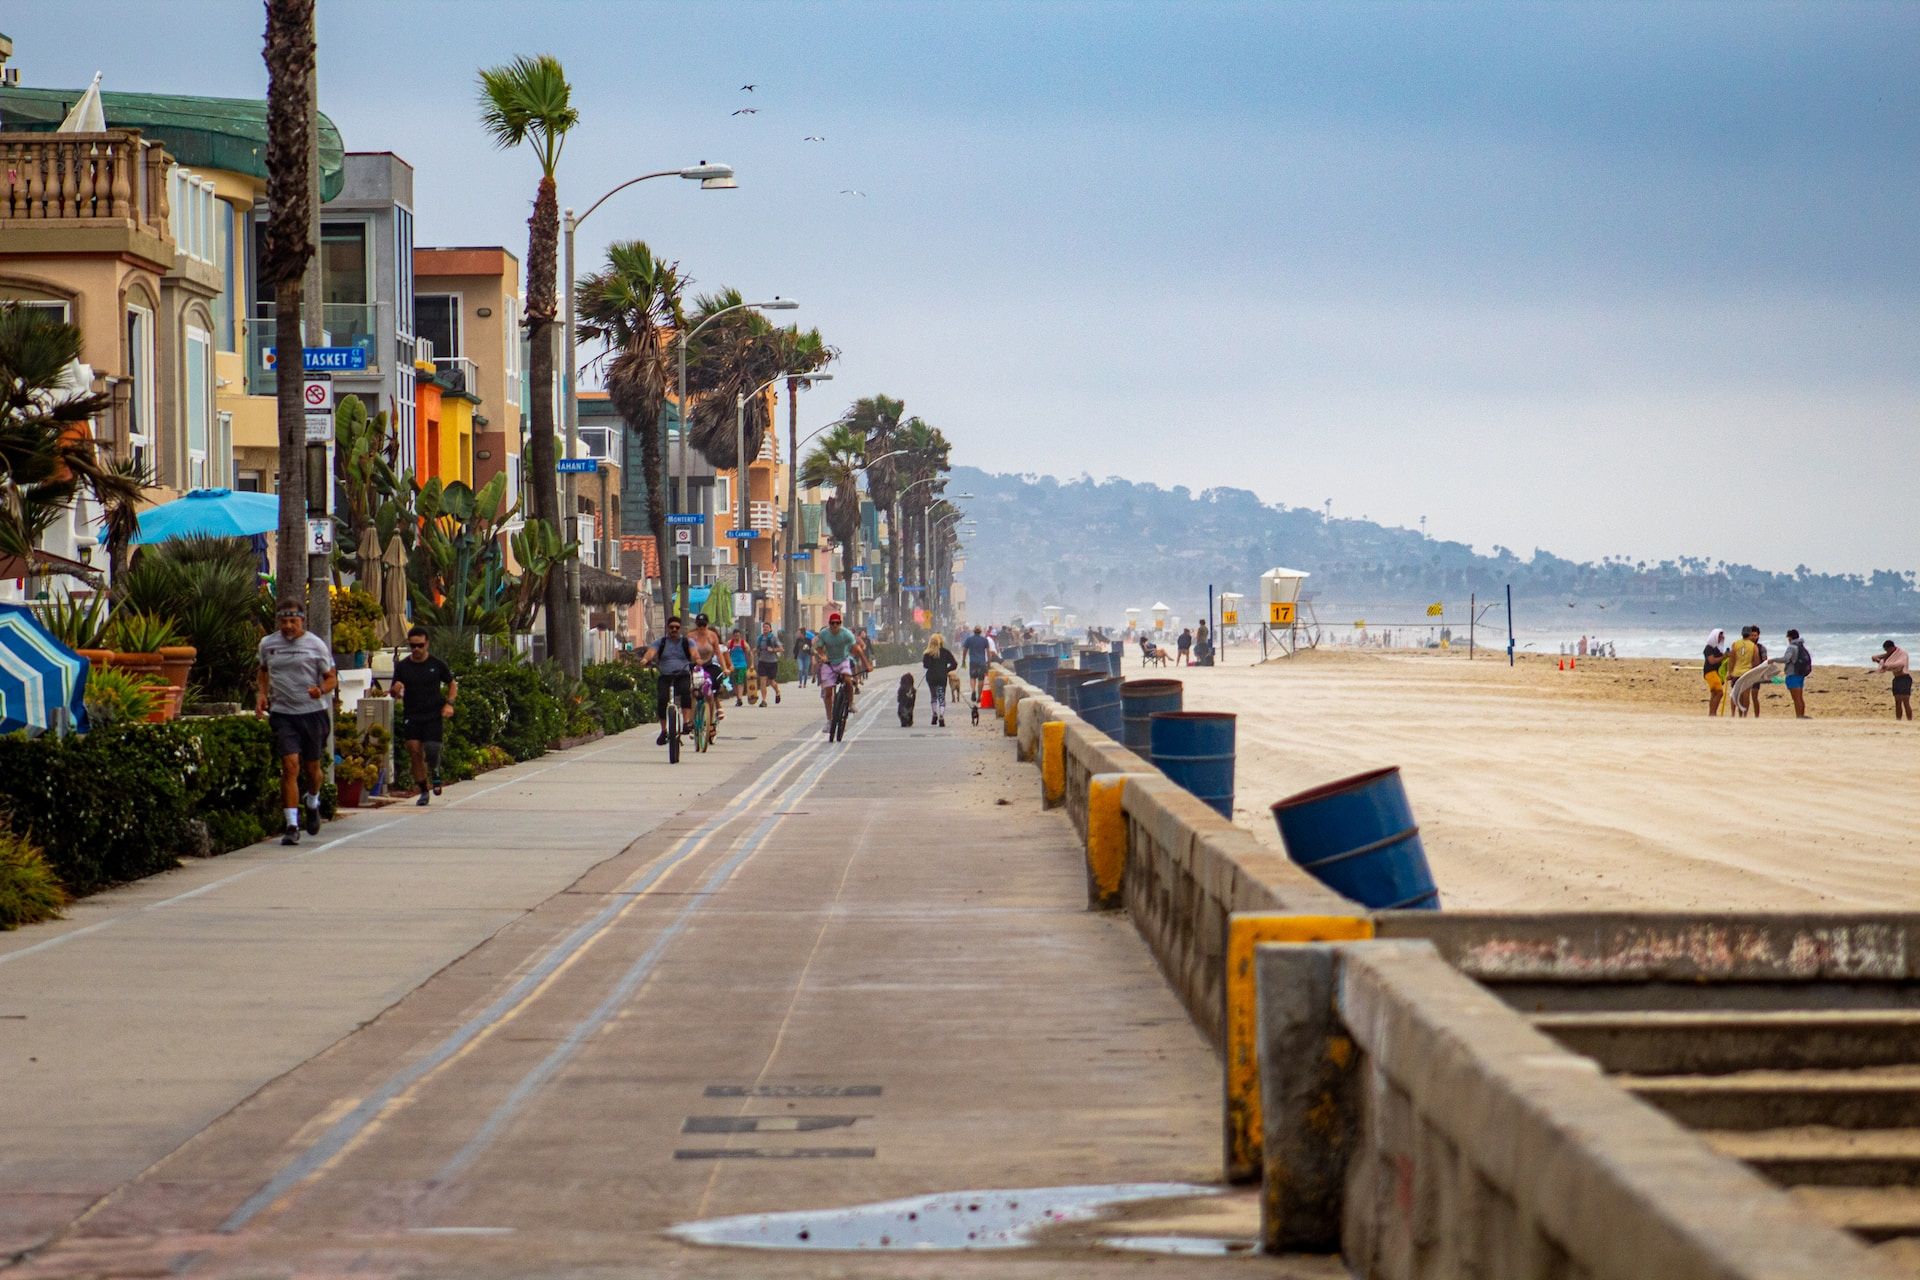 Mission Beach Boardwalk in San Diego